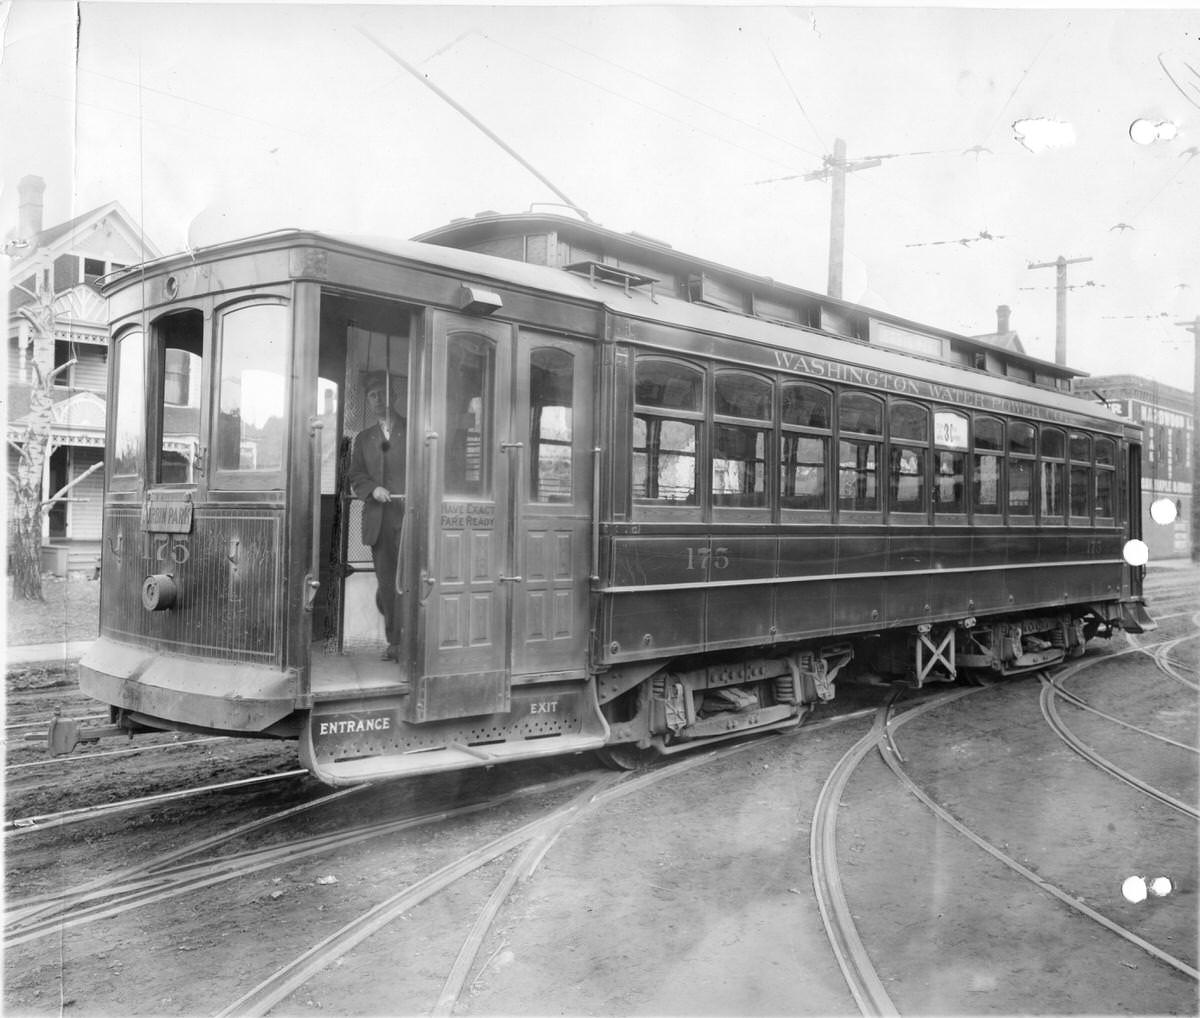 Streetcar no. 175 in Spokane, 1915